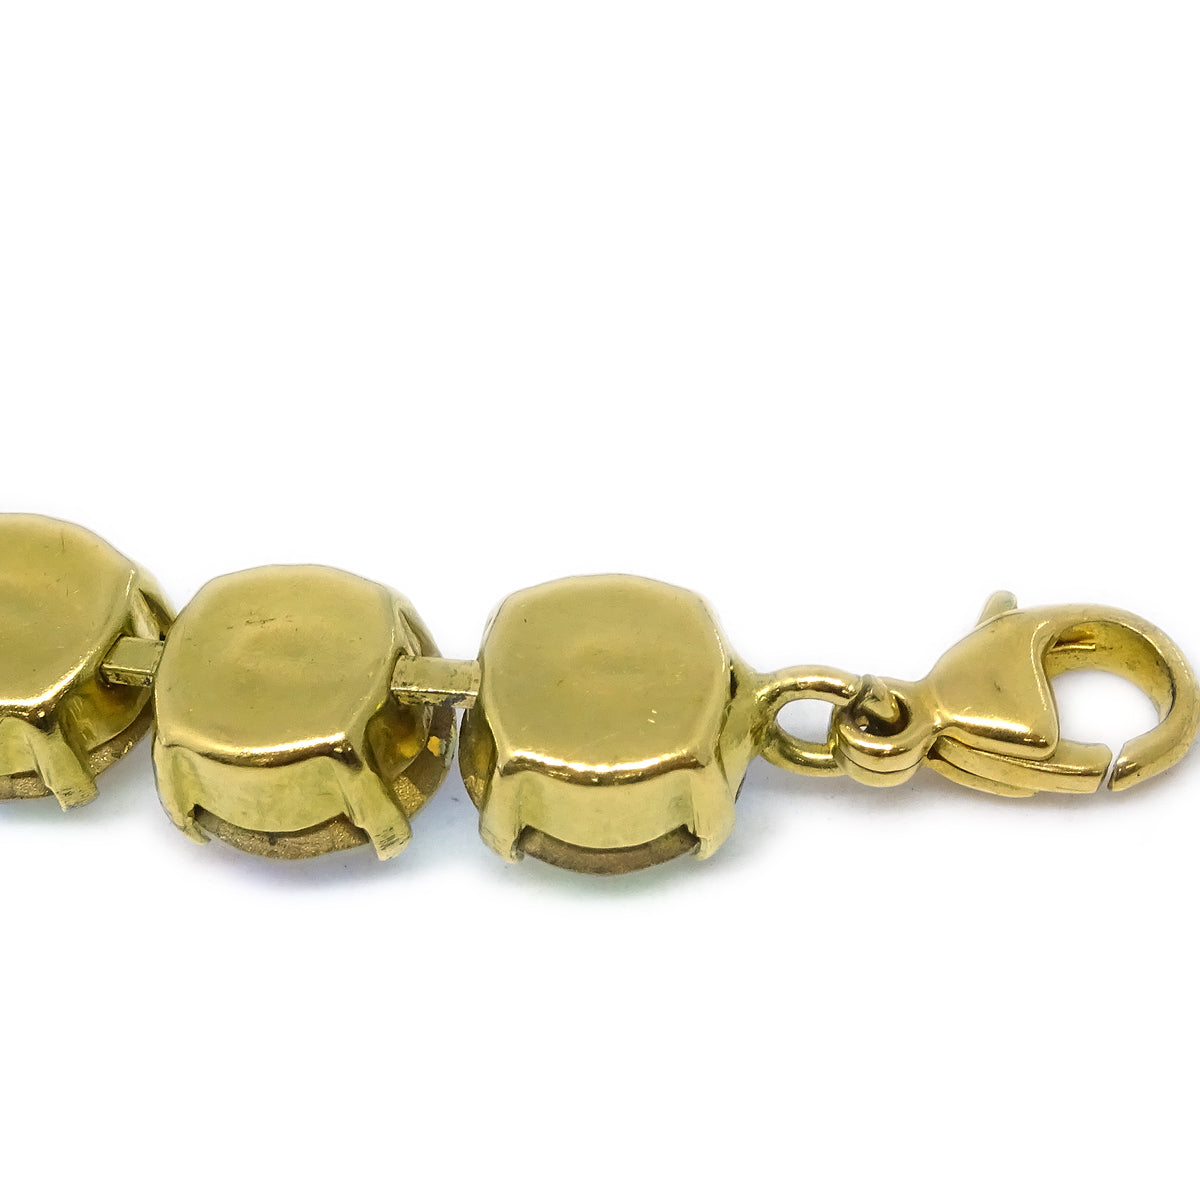 Chanel Rhinestone Chain Bracelet Gold 95P